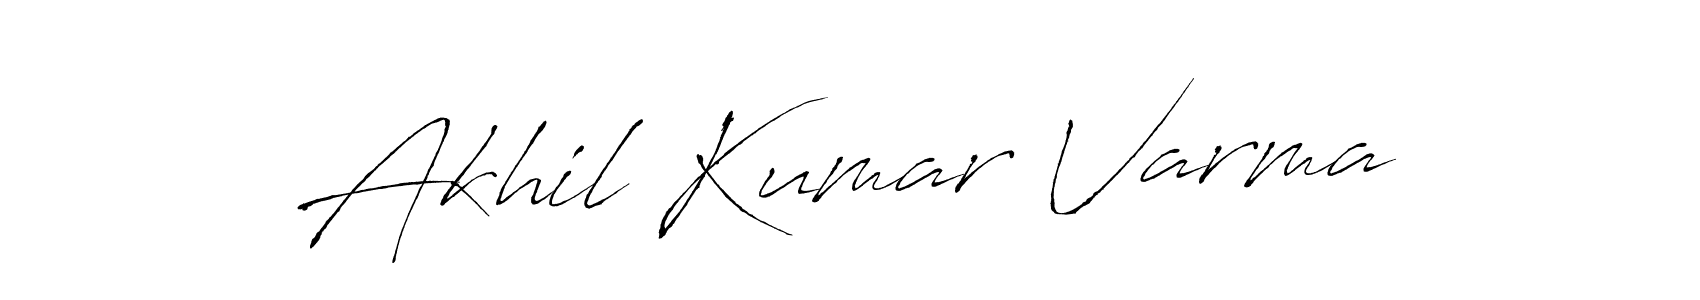 Make a beautiful signature design for name Akhil Kumar Varma. Use this online signature maker to create a handwritten signature for free. Akhil Kumar Varma signature style 6 images and pictures png